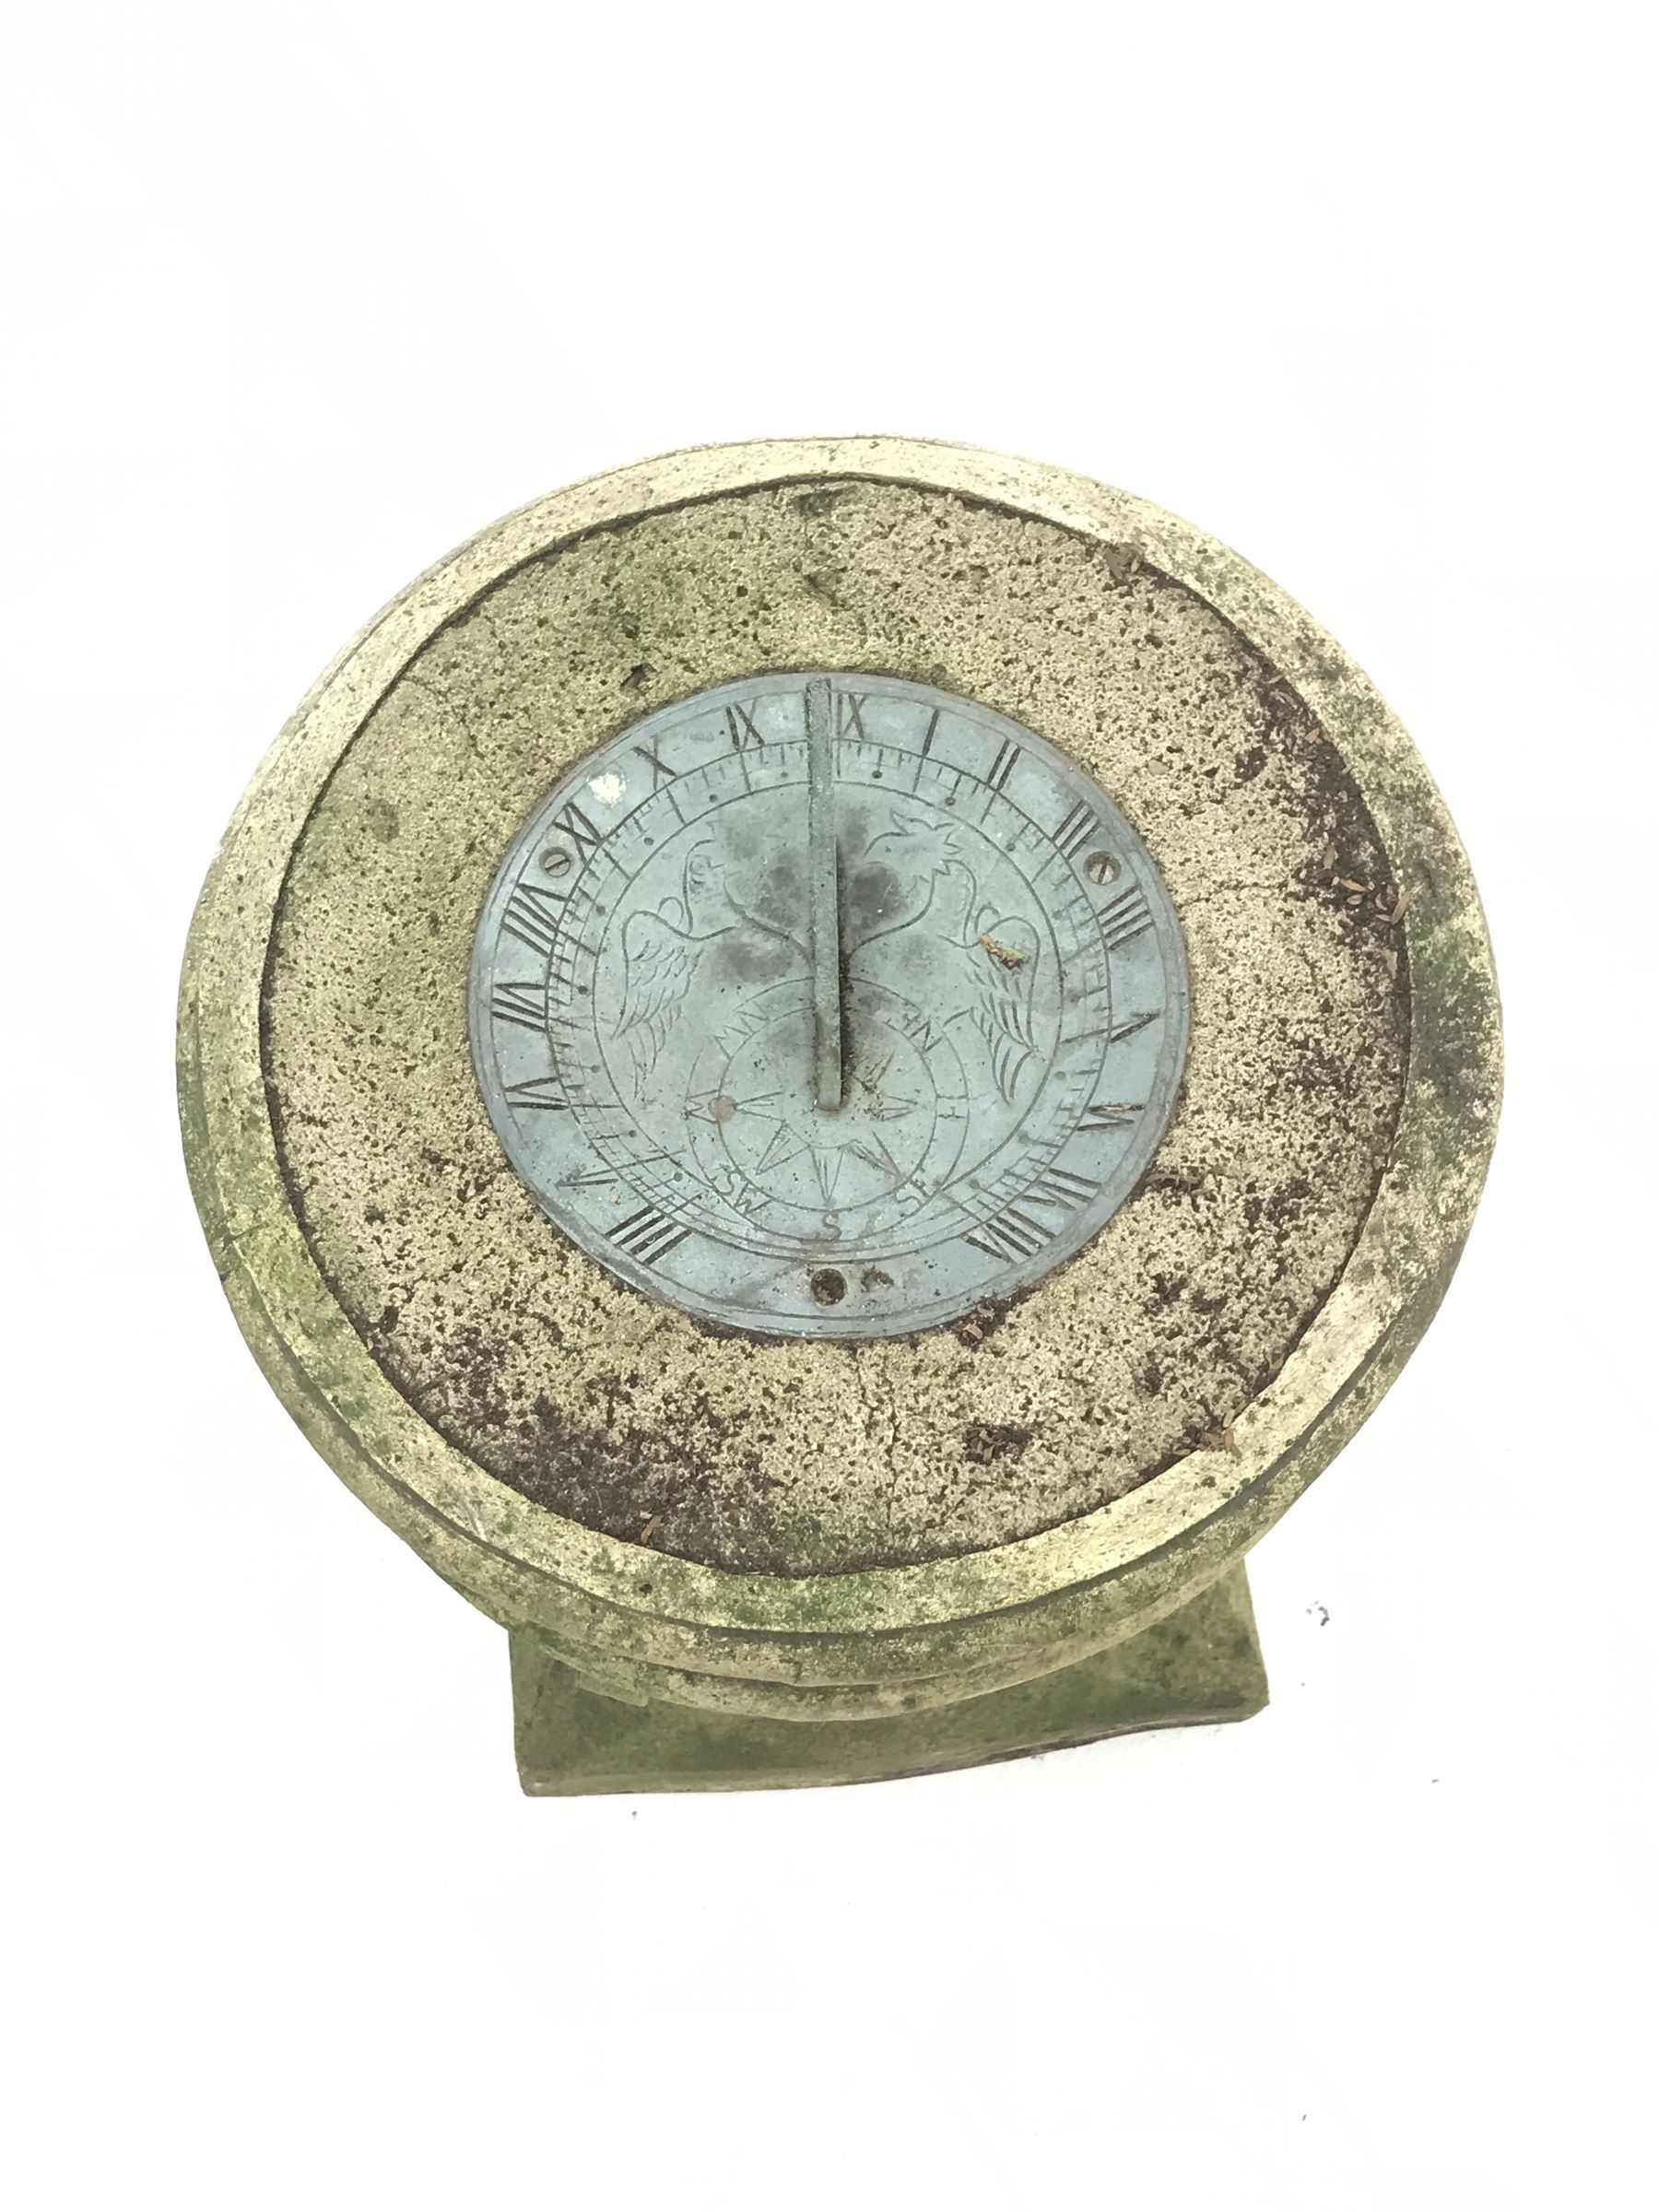 Composite stone sun dial - Image 3 of 3